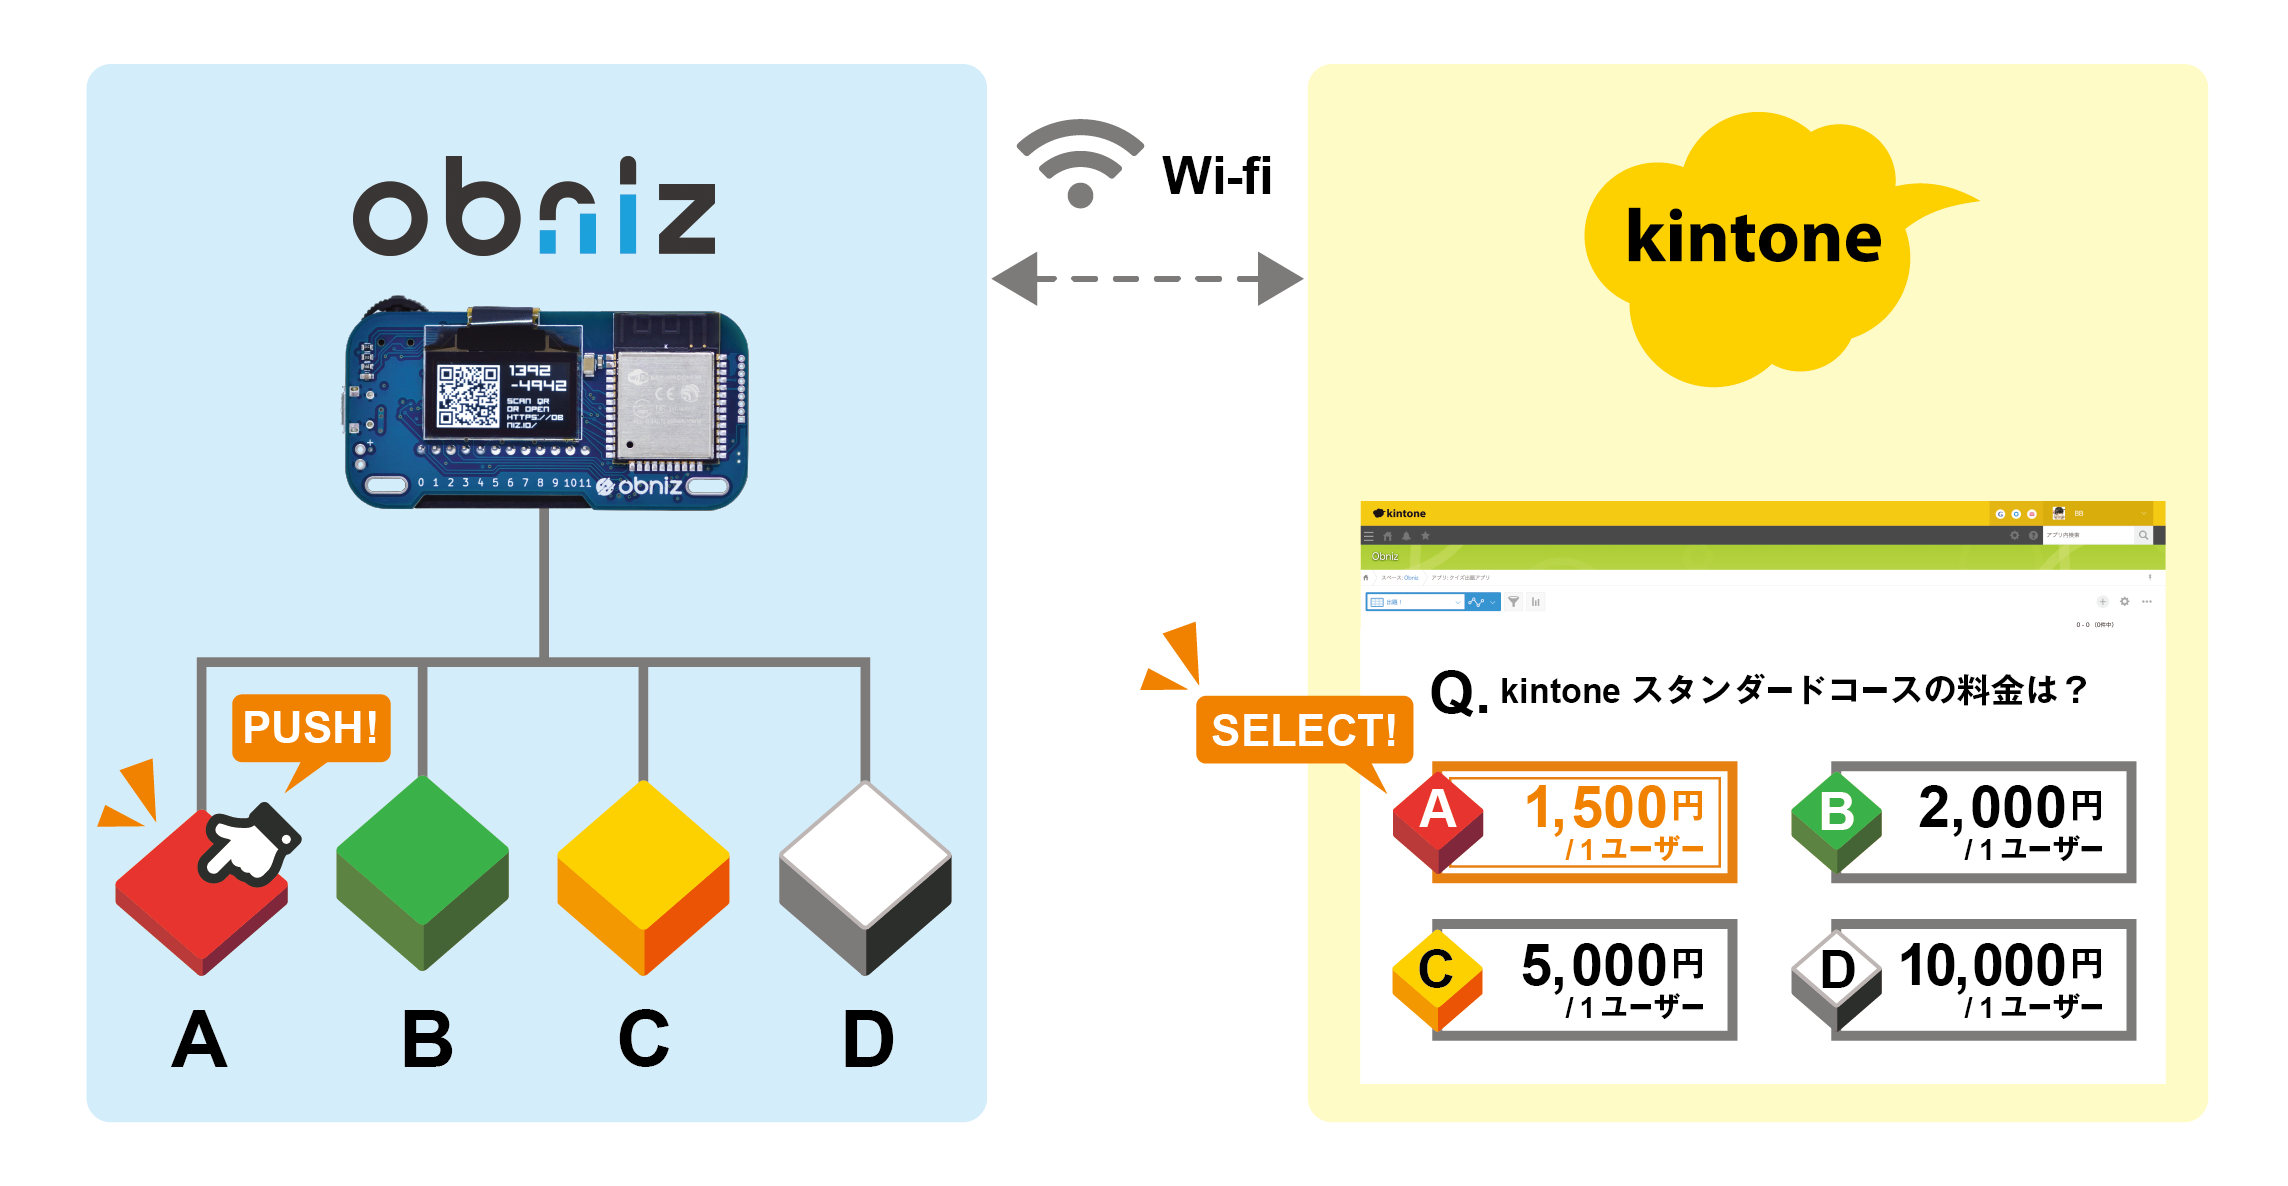 obniz と kintone の連携イメージ